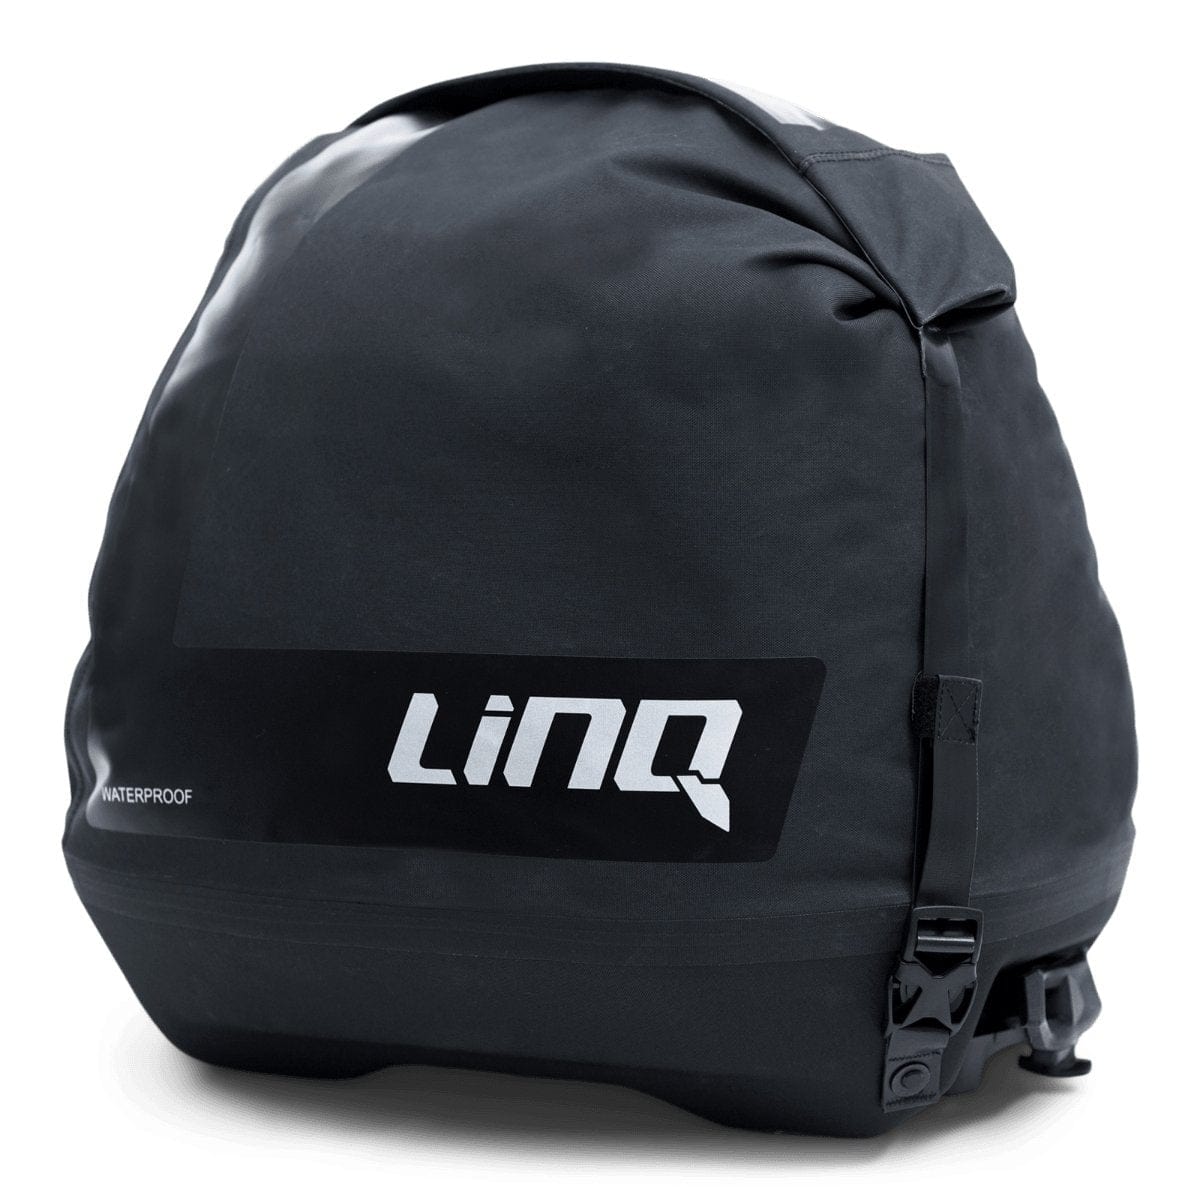 LinQ Dry Bag